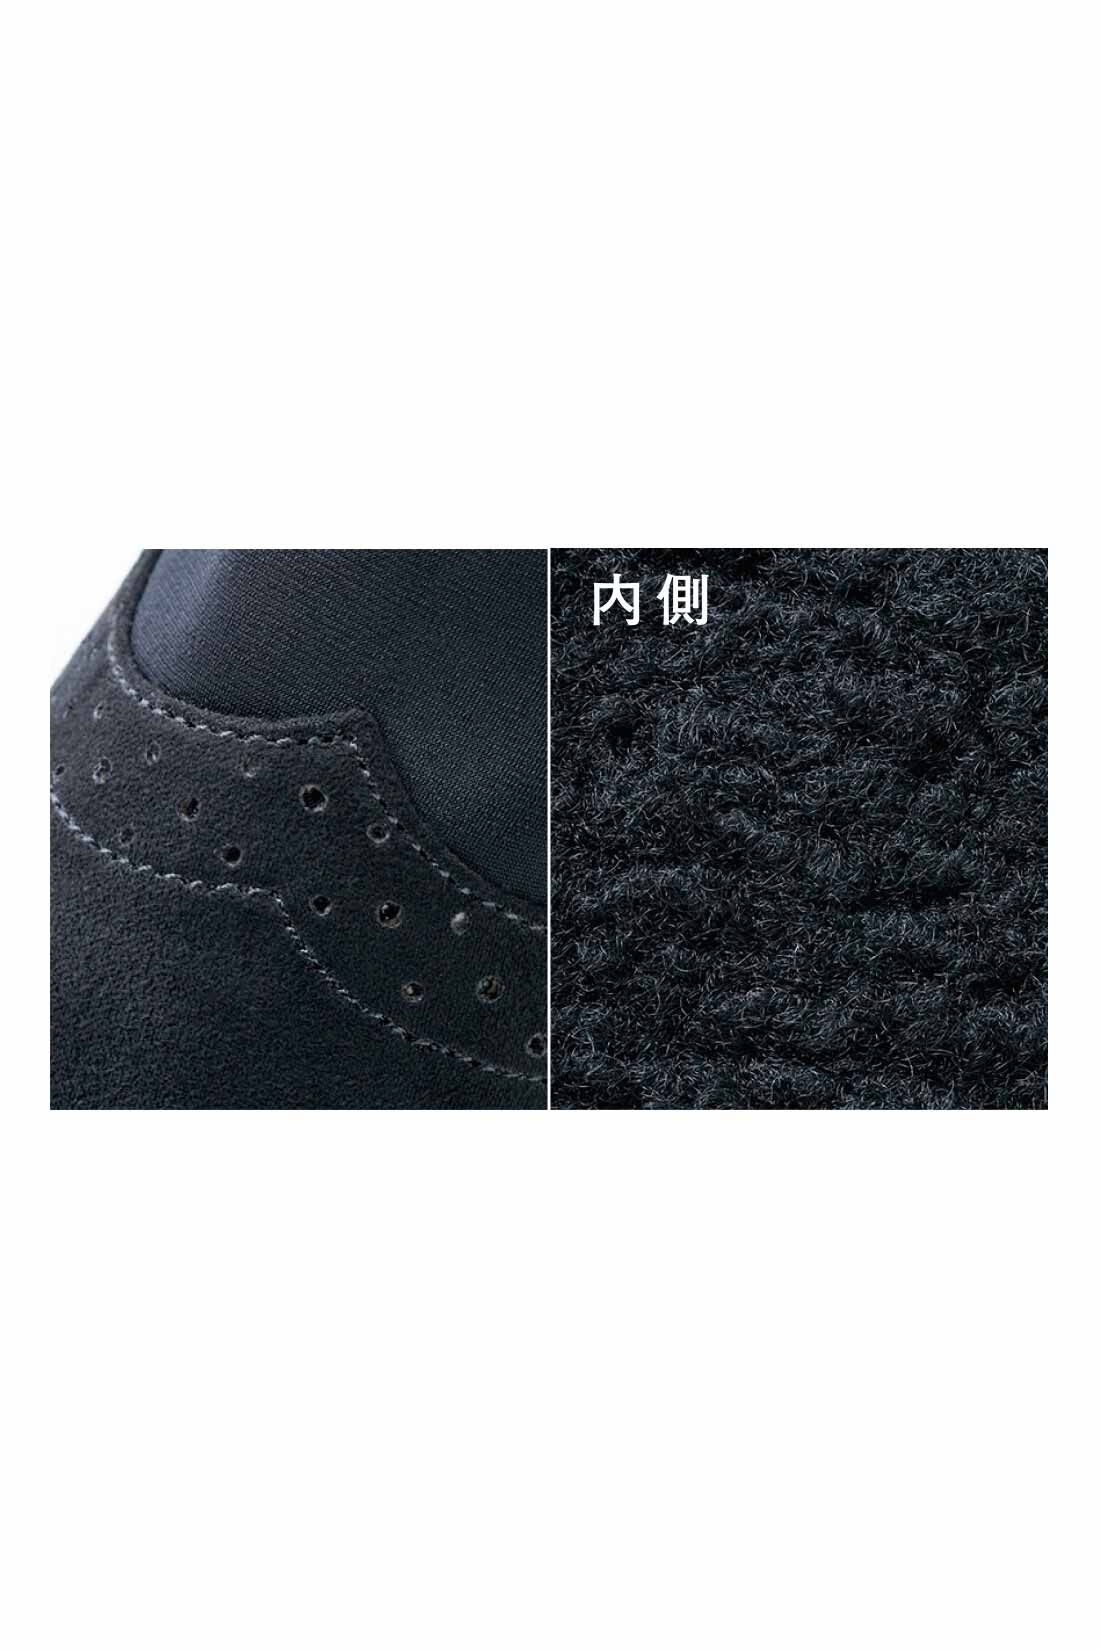 IEDIT|IEDIT[イディット]　裏ボア素材で足もとうれしい あったかきれいめシューズ〈ブラック〉|スエード調素材にパンチングデザインがリッチな印象。内側はボアで暖かな履き心地。